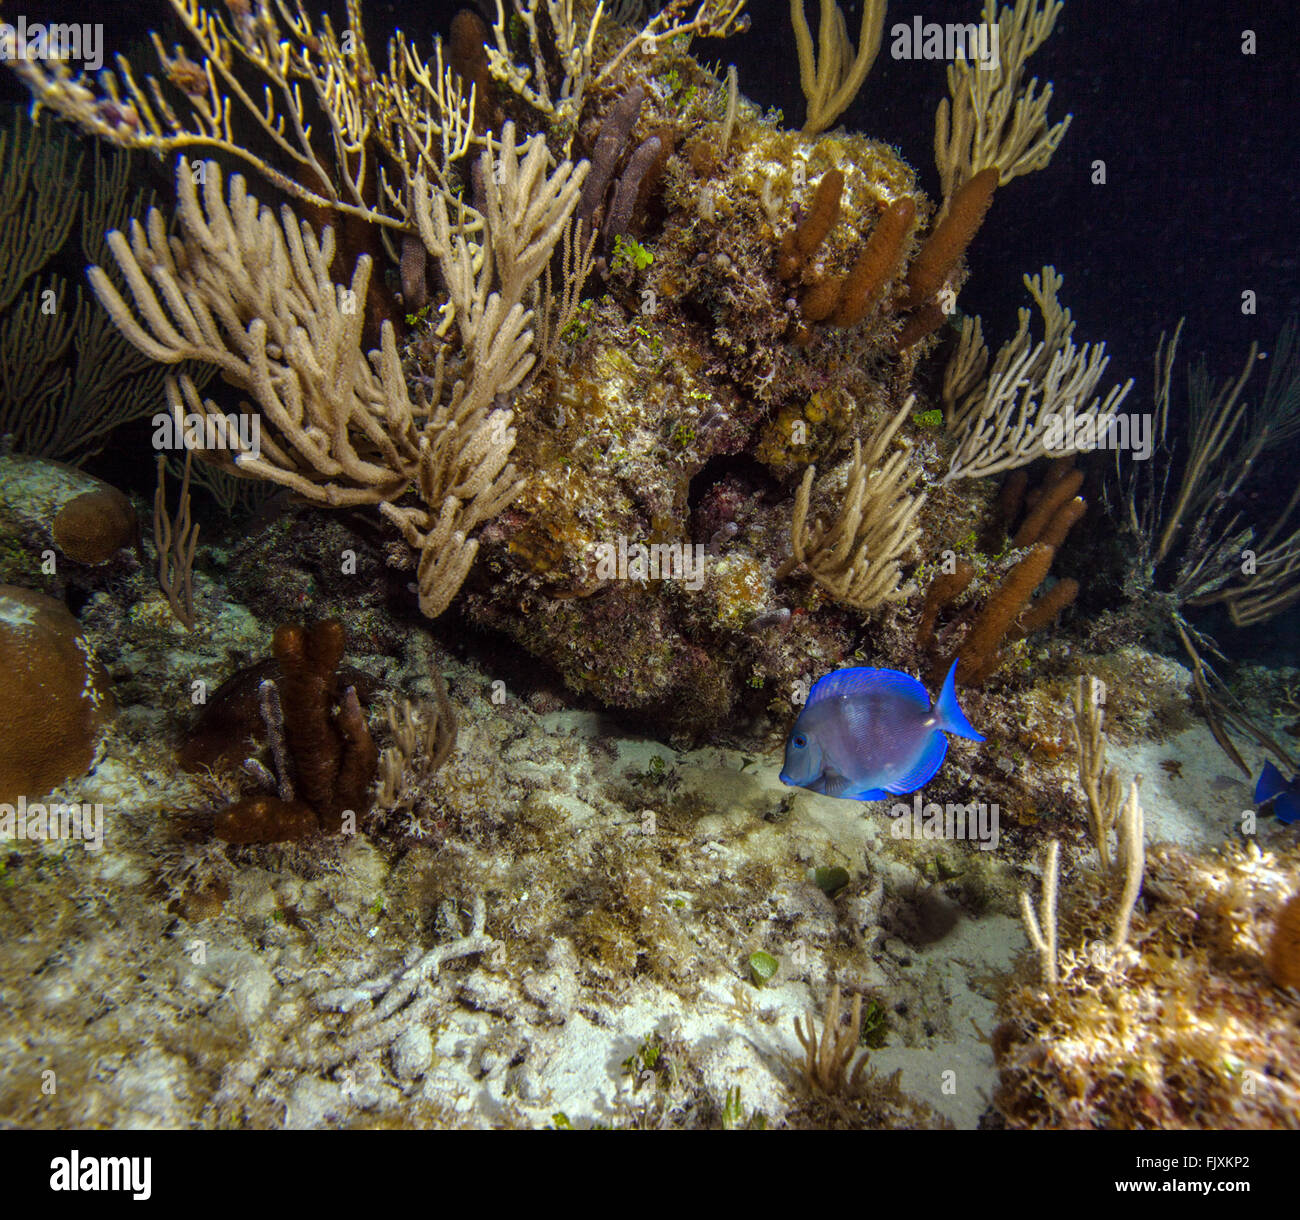 Blue Surgeonfish (Acanthurus coeruleus) during night dive, Cuba Stock Photo